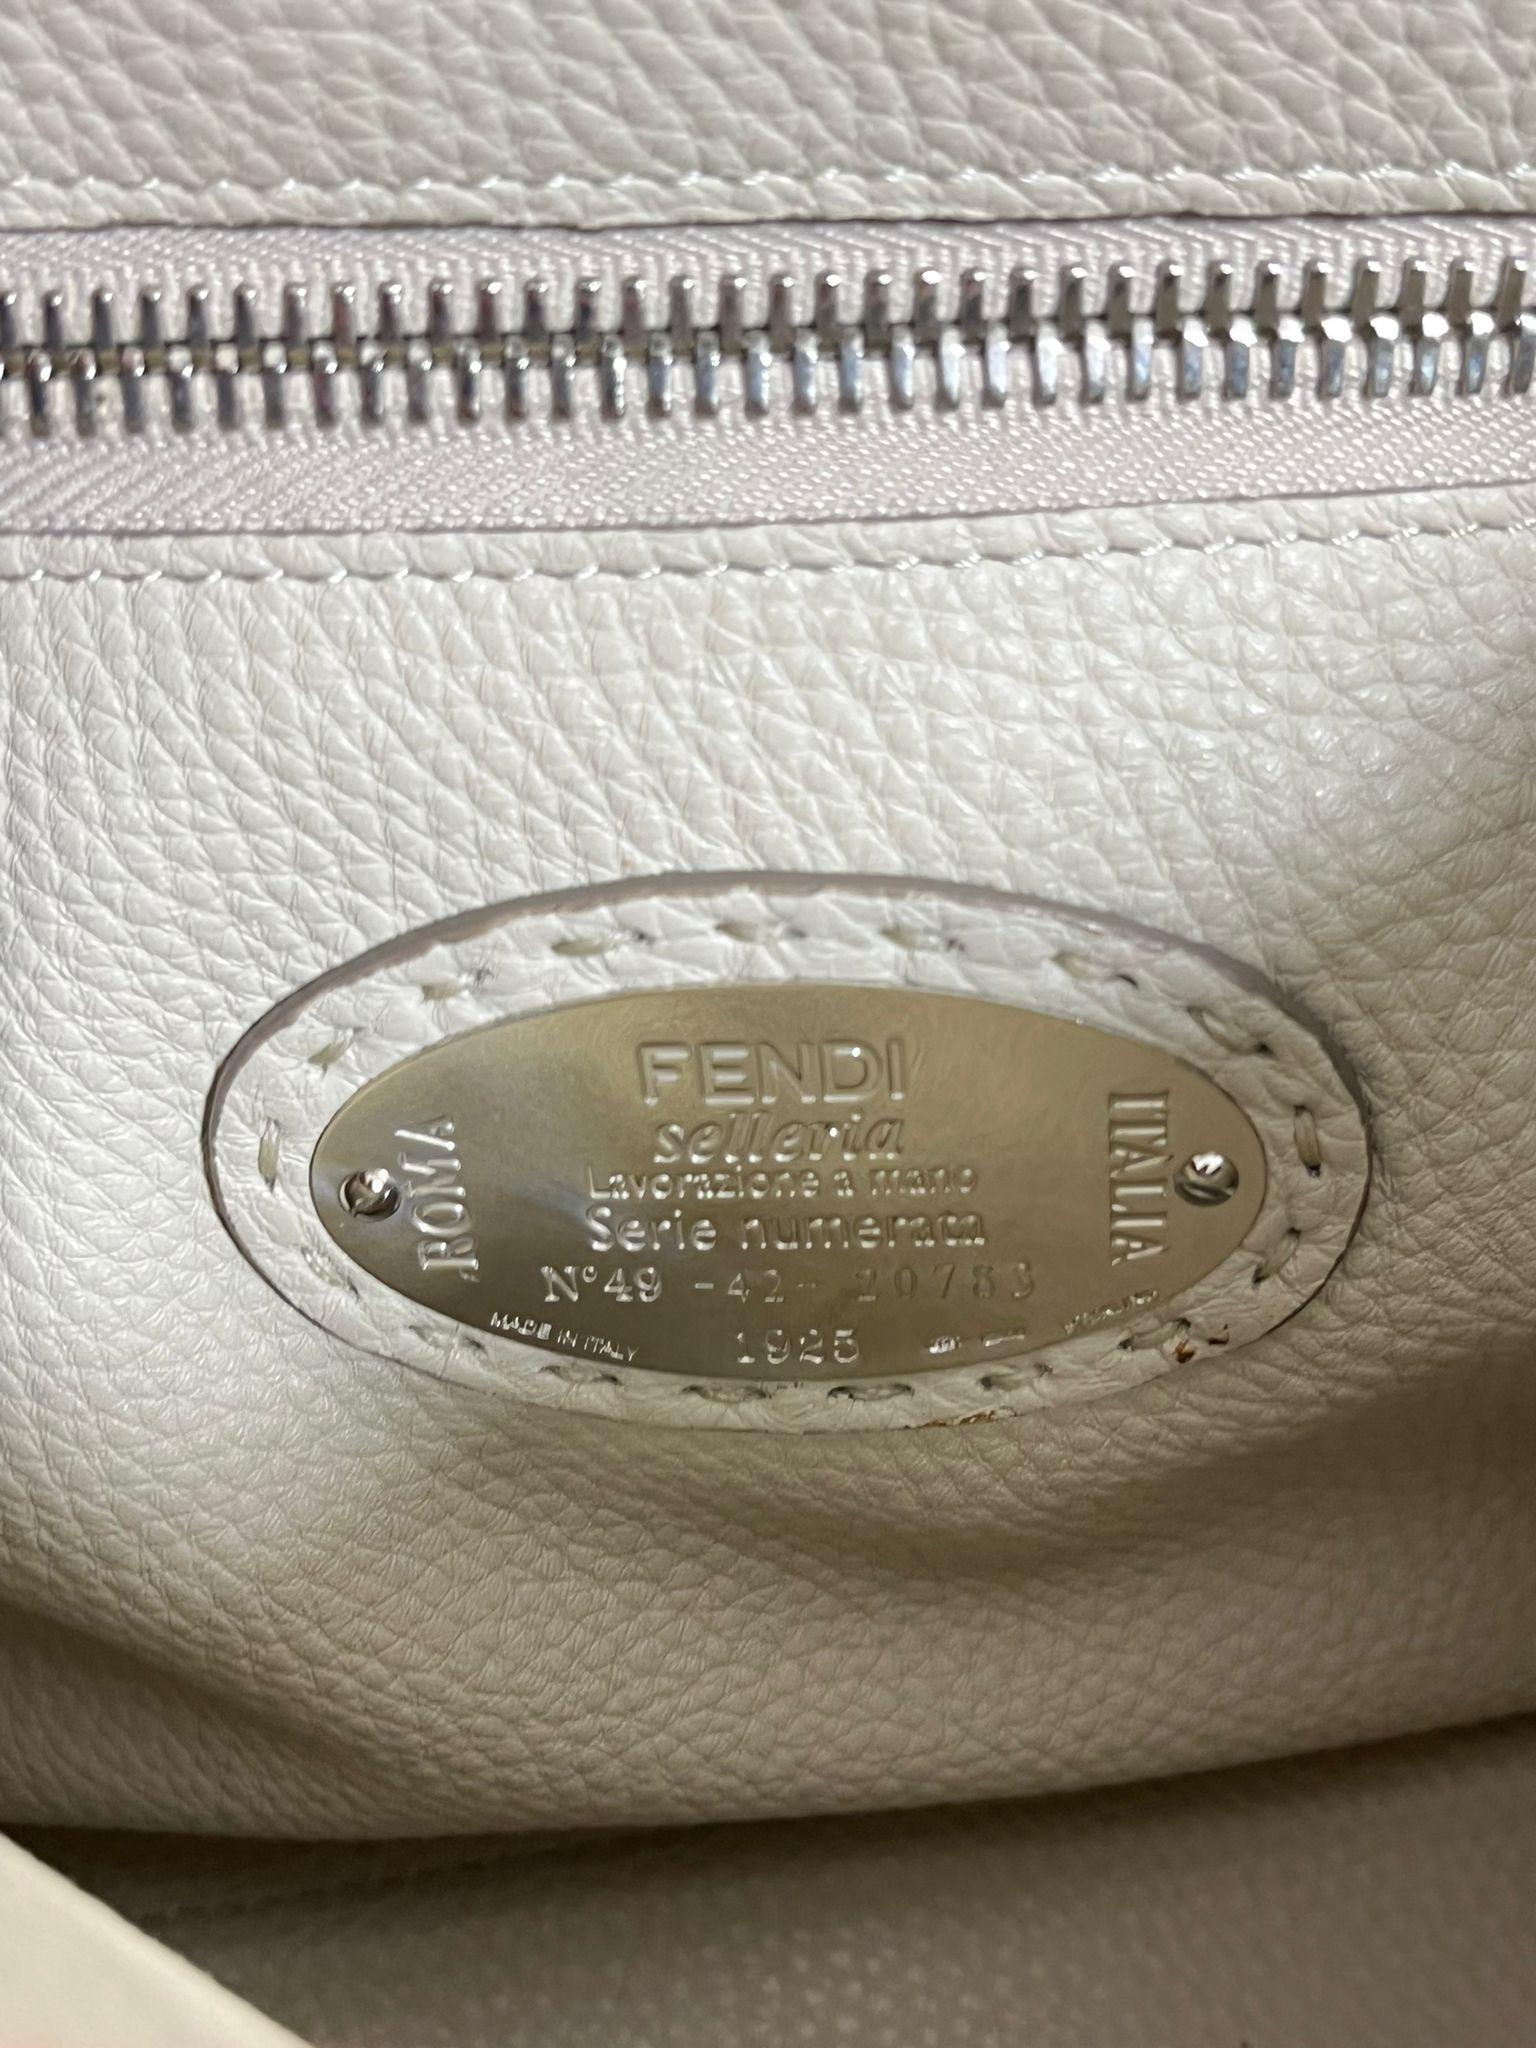 Fendi Peekaboo Medium Model Leather Bag For Sale 5